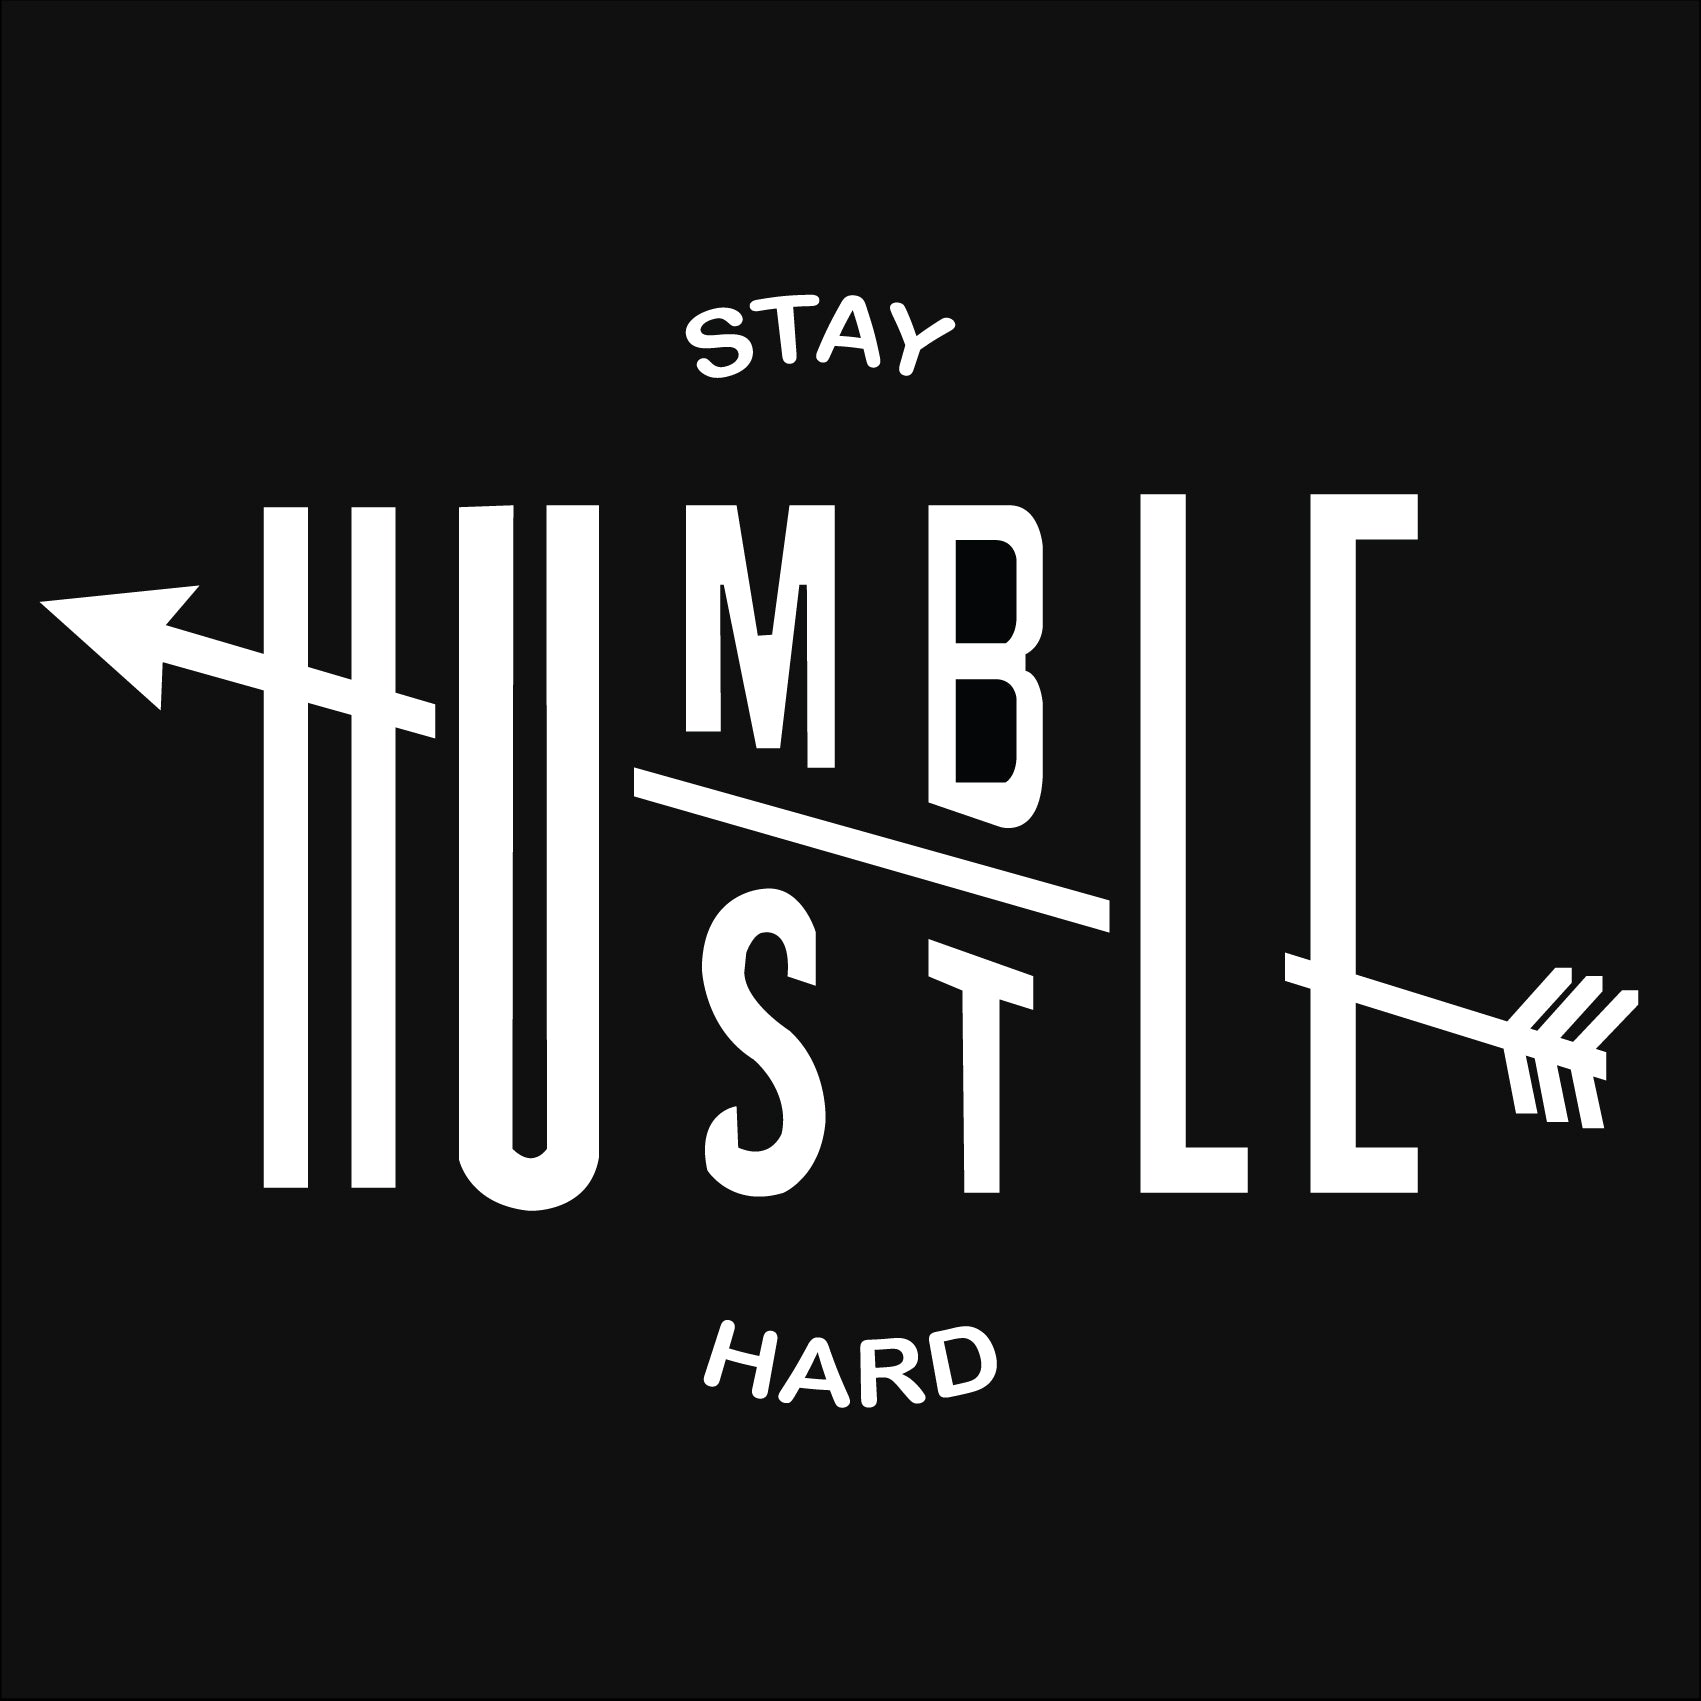 Stay Humble Hustle Hard Reactr Tshirts For Men - Eyewearlabs